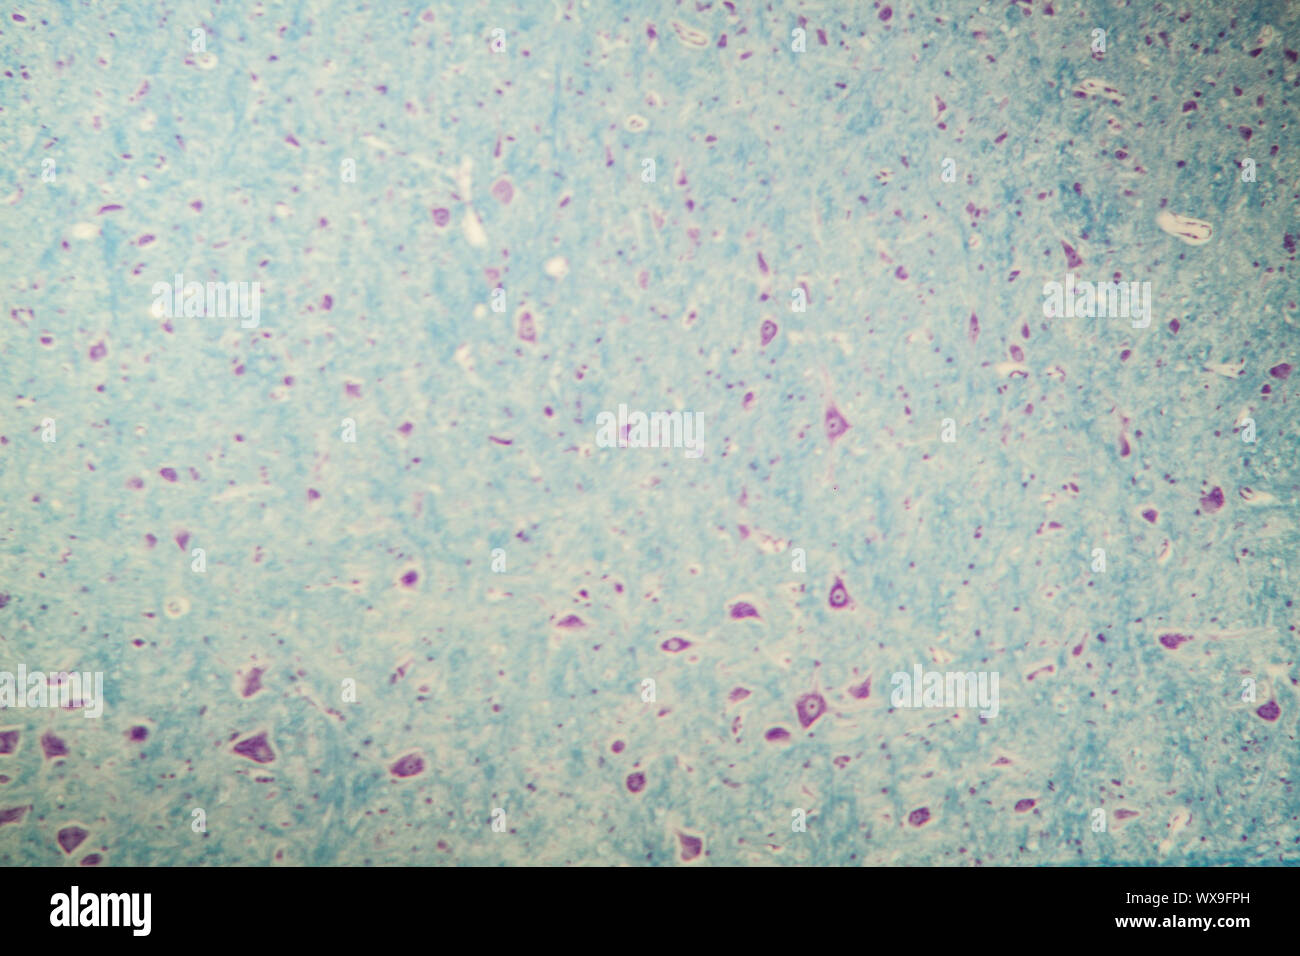 Rat nerve cells under the microscope 100x Stock Photo